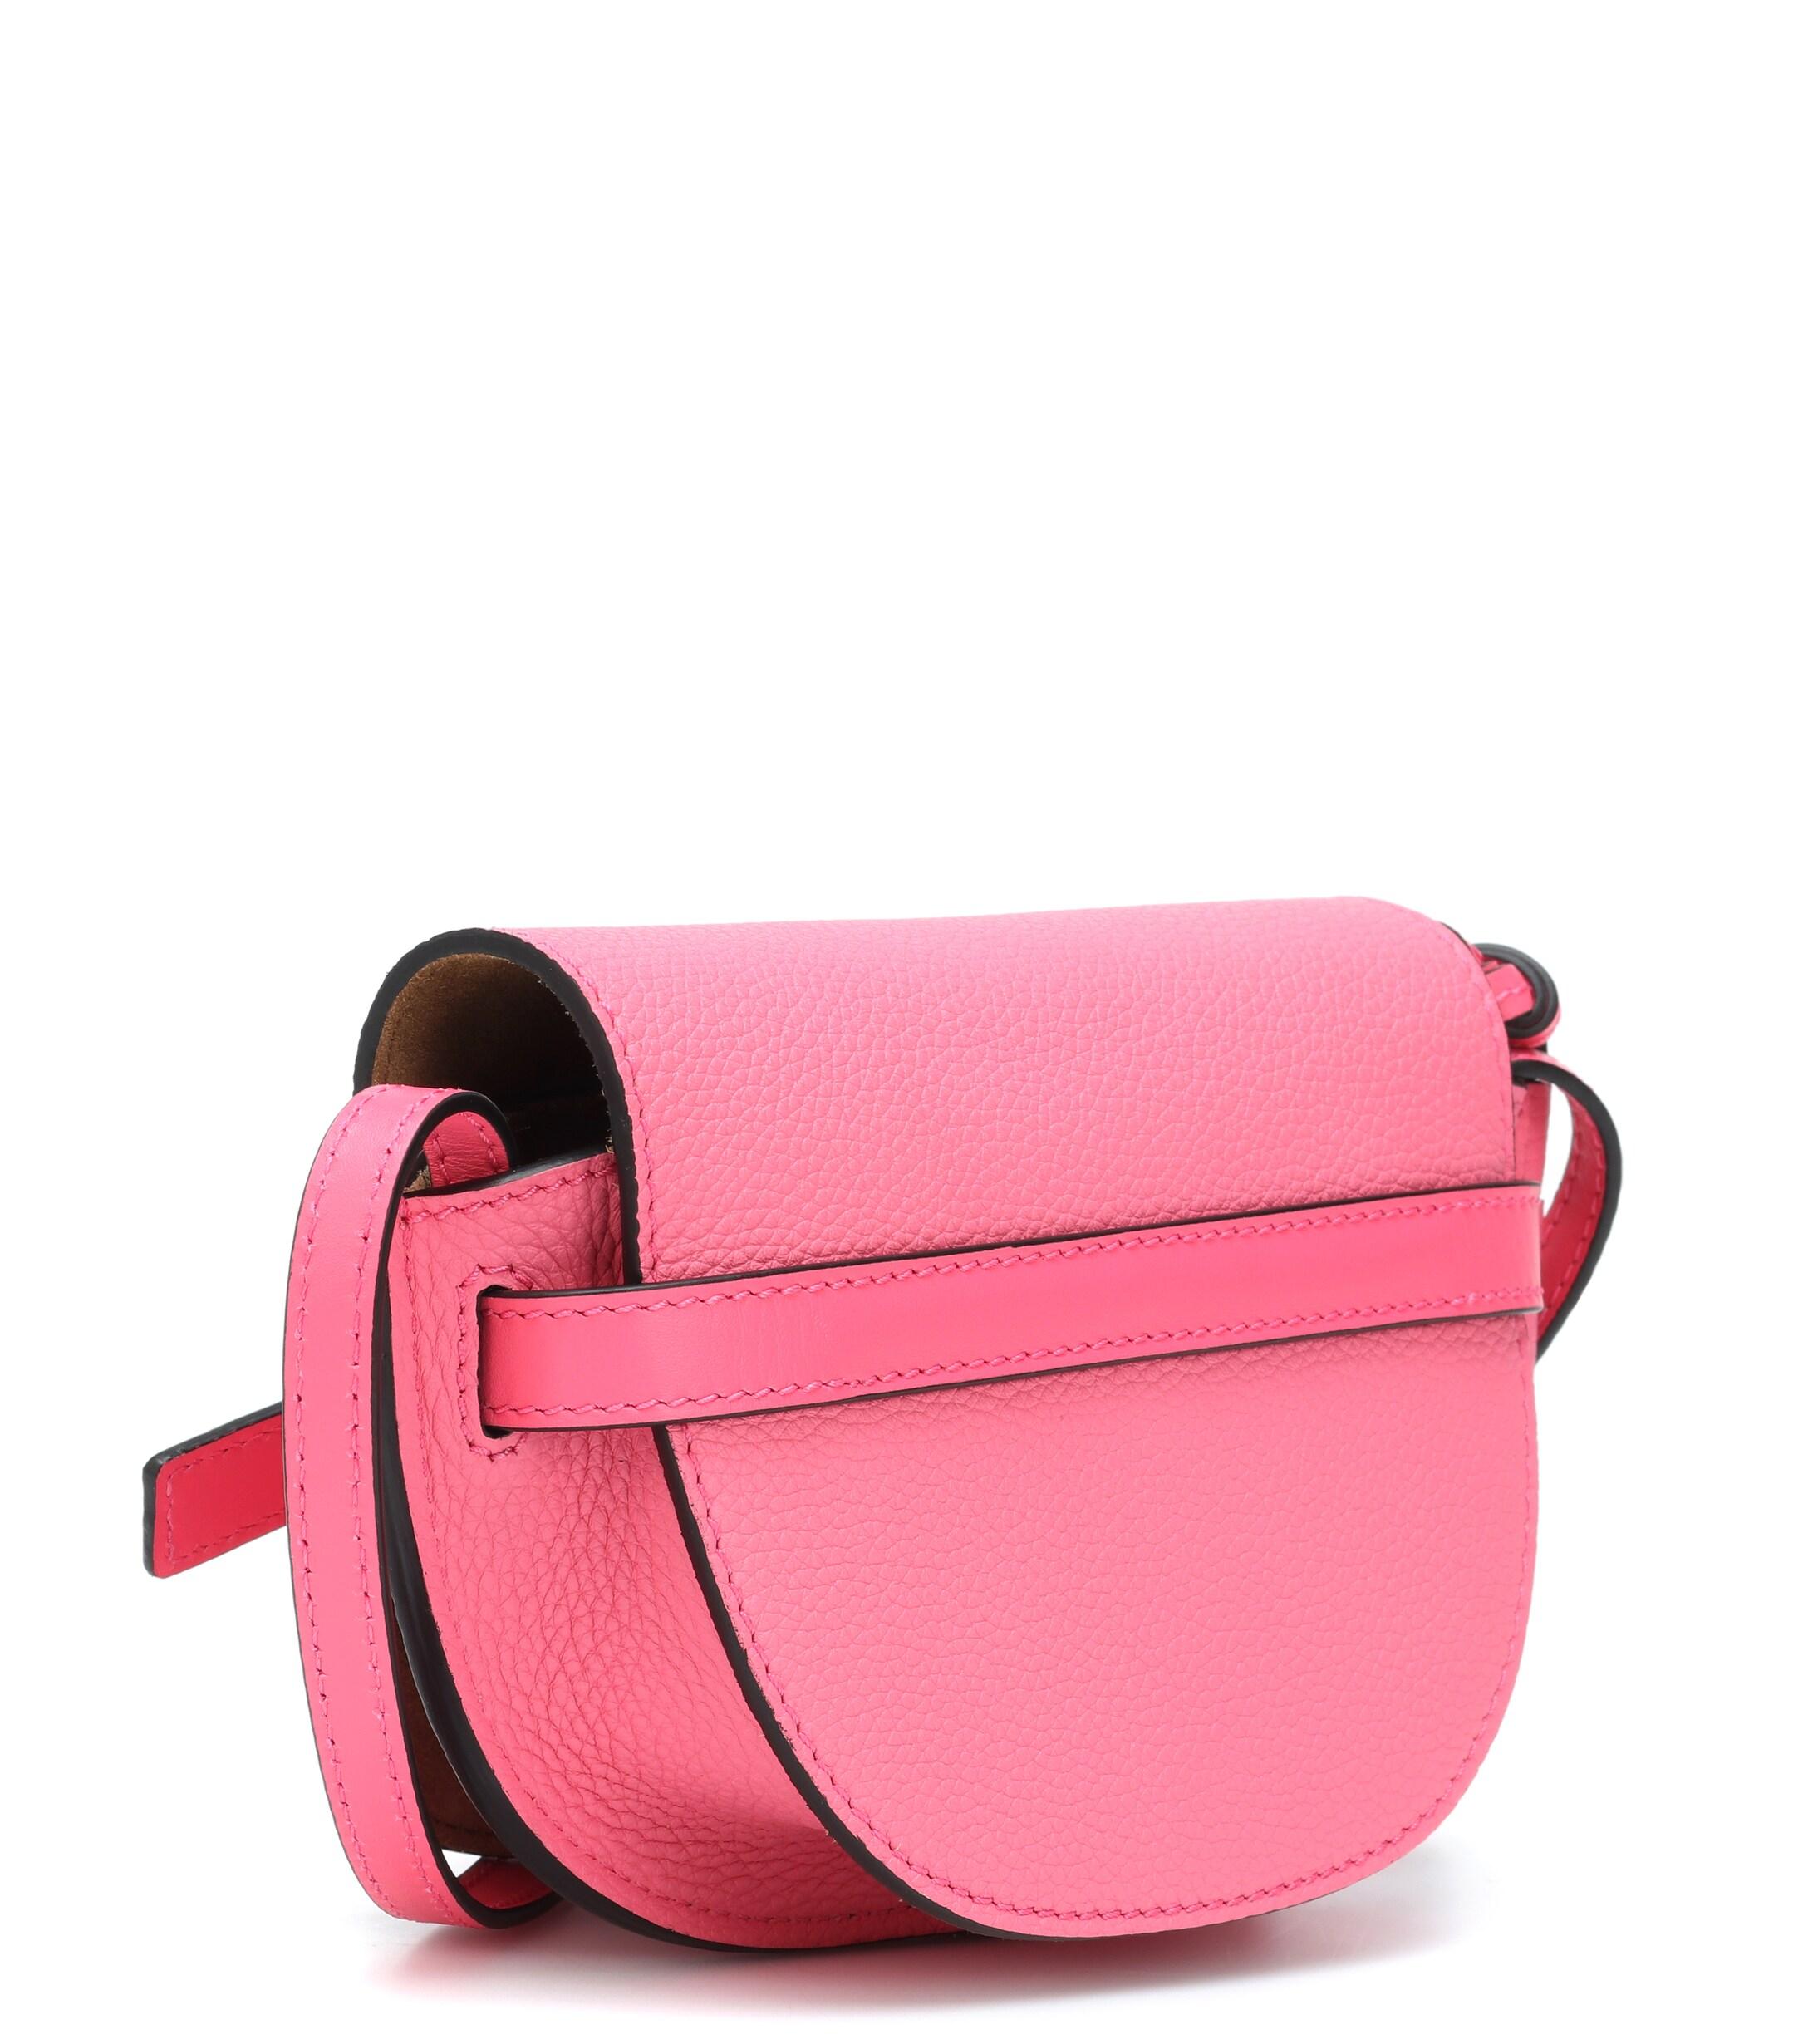 Loewe Gate Mini Leather Crossbody Bag in Pink - Lyst